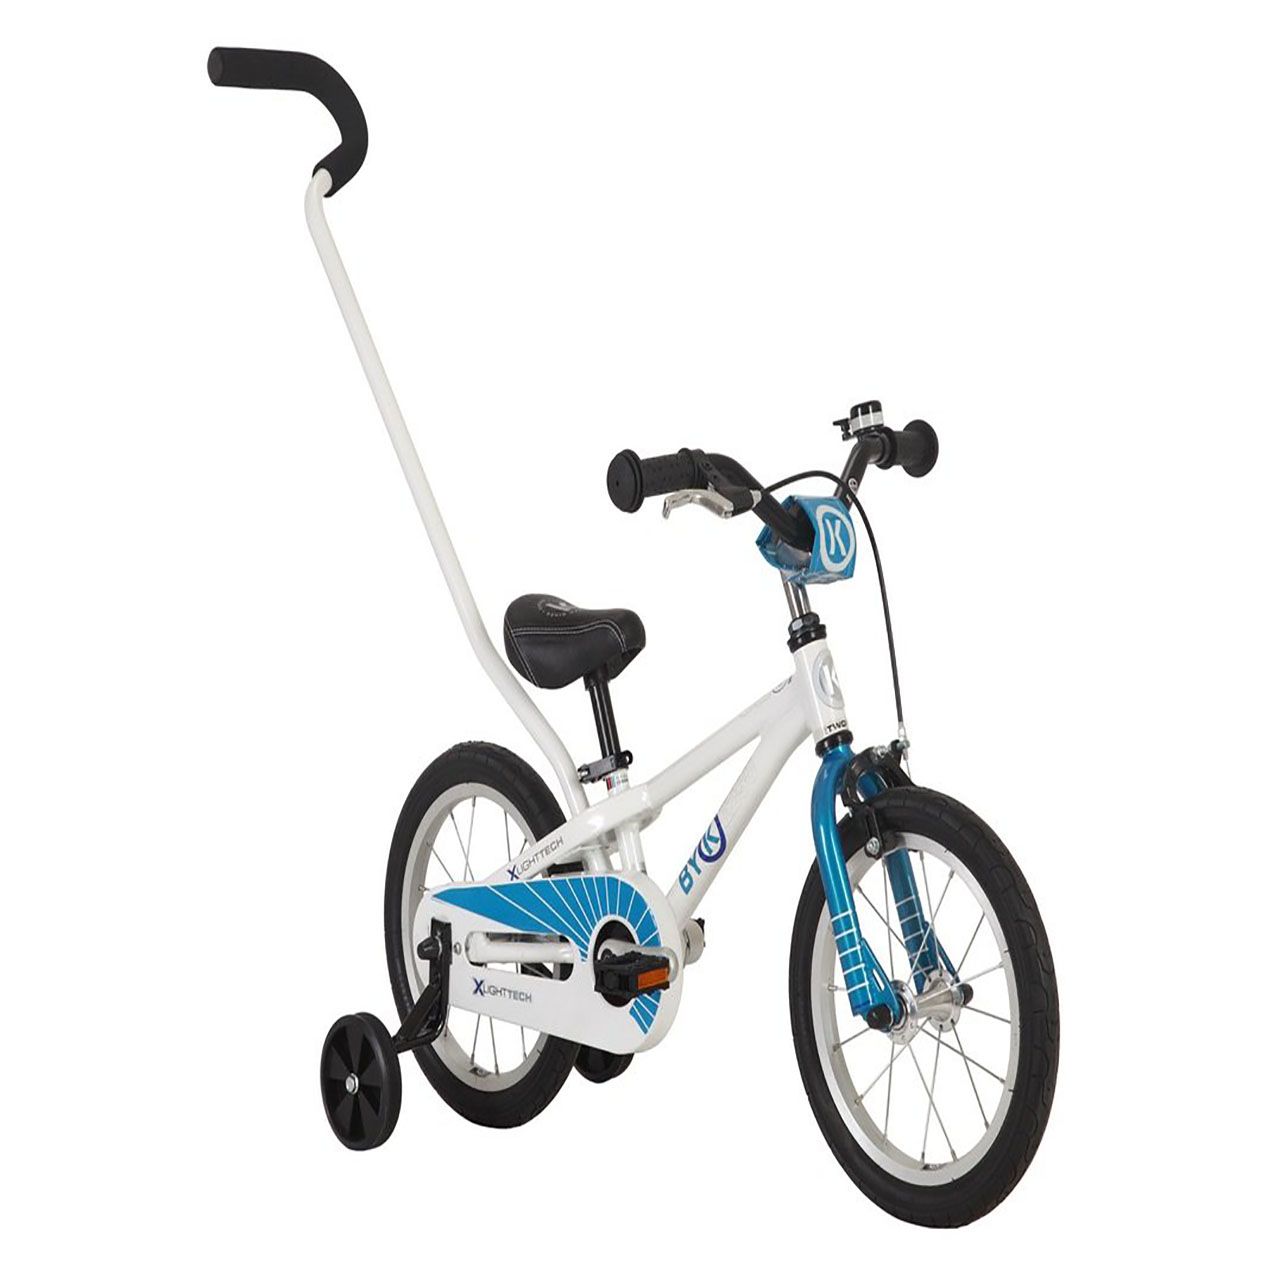 ByK Kids Balance Bike E-250 with handle Age: 2-5 Years Learning to ride bike